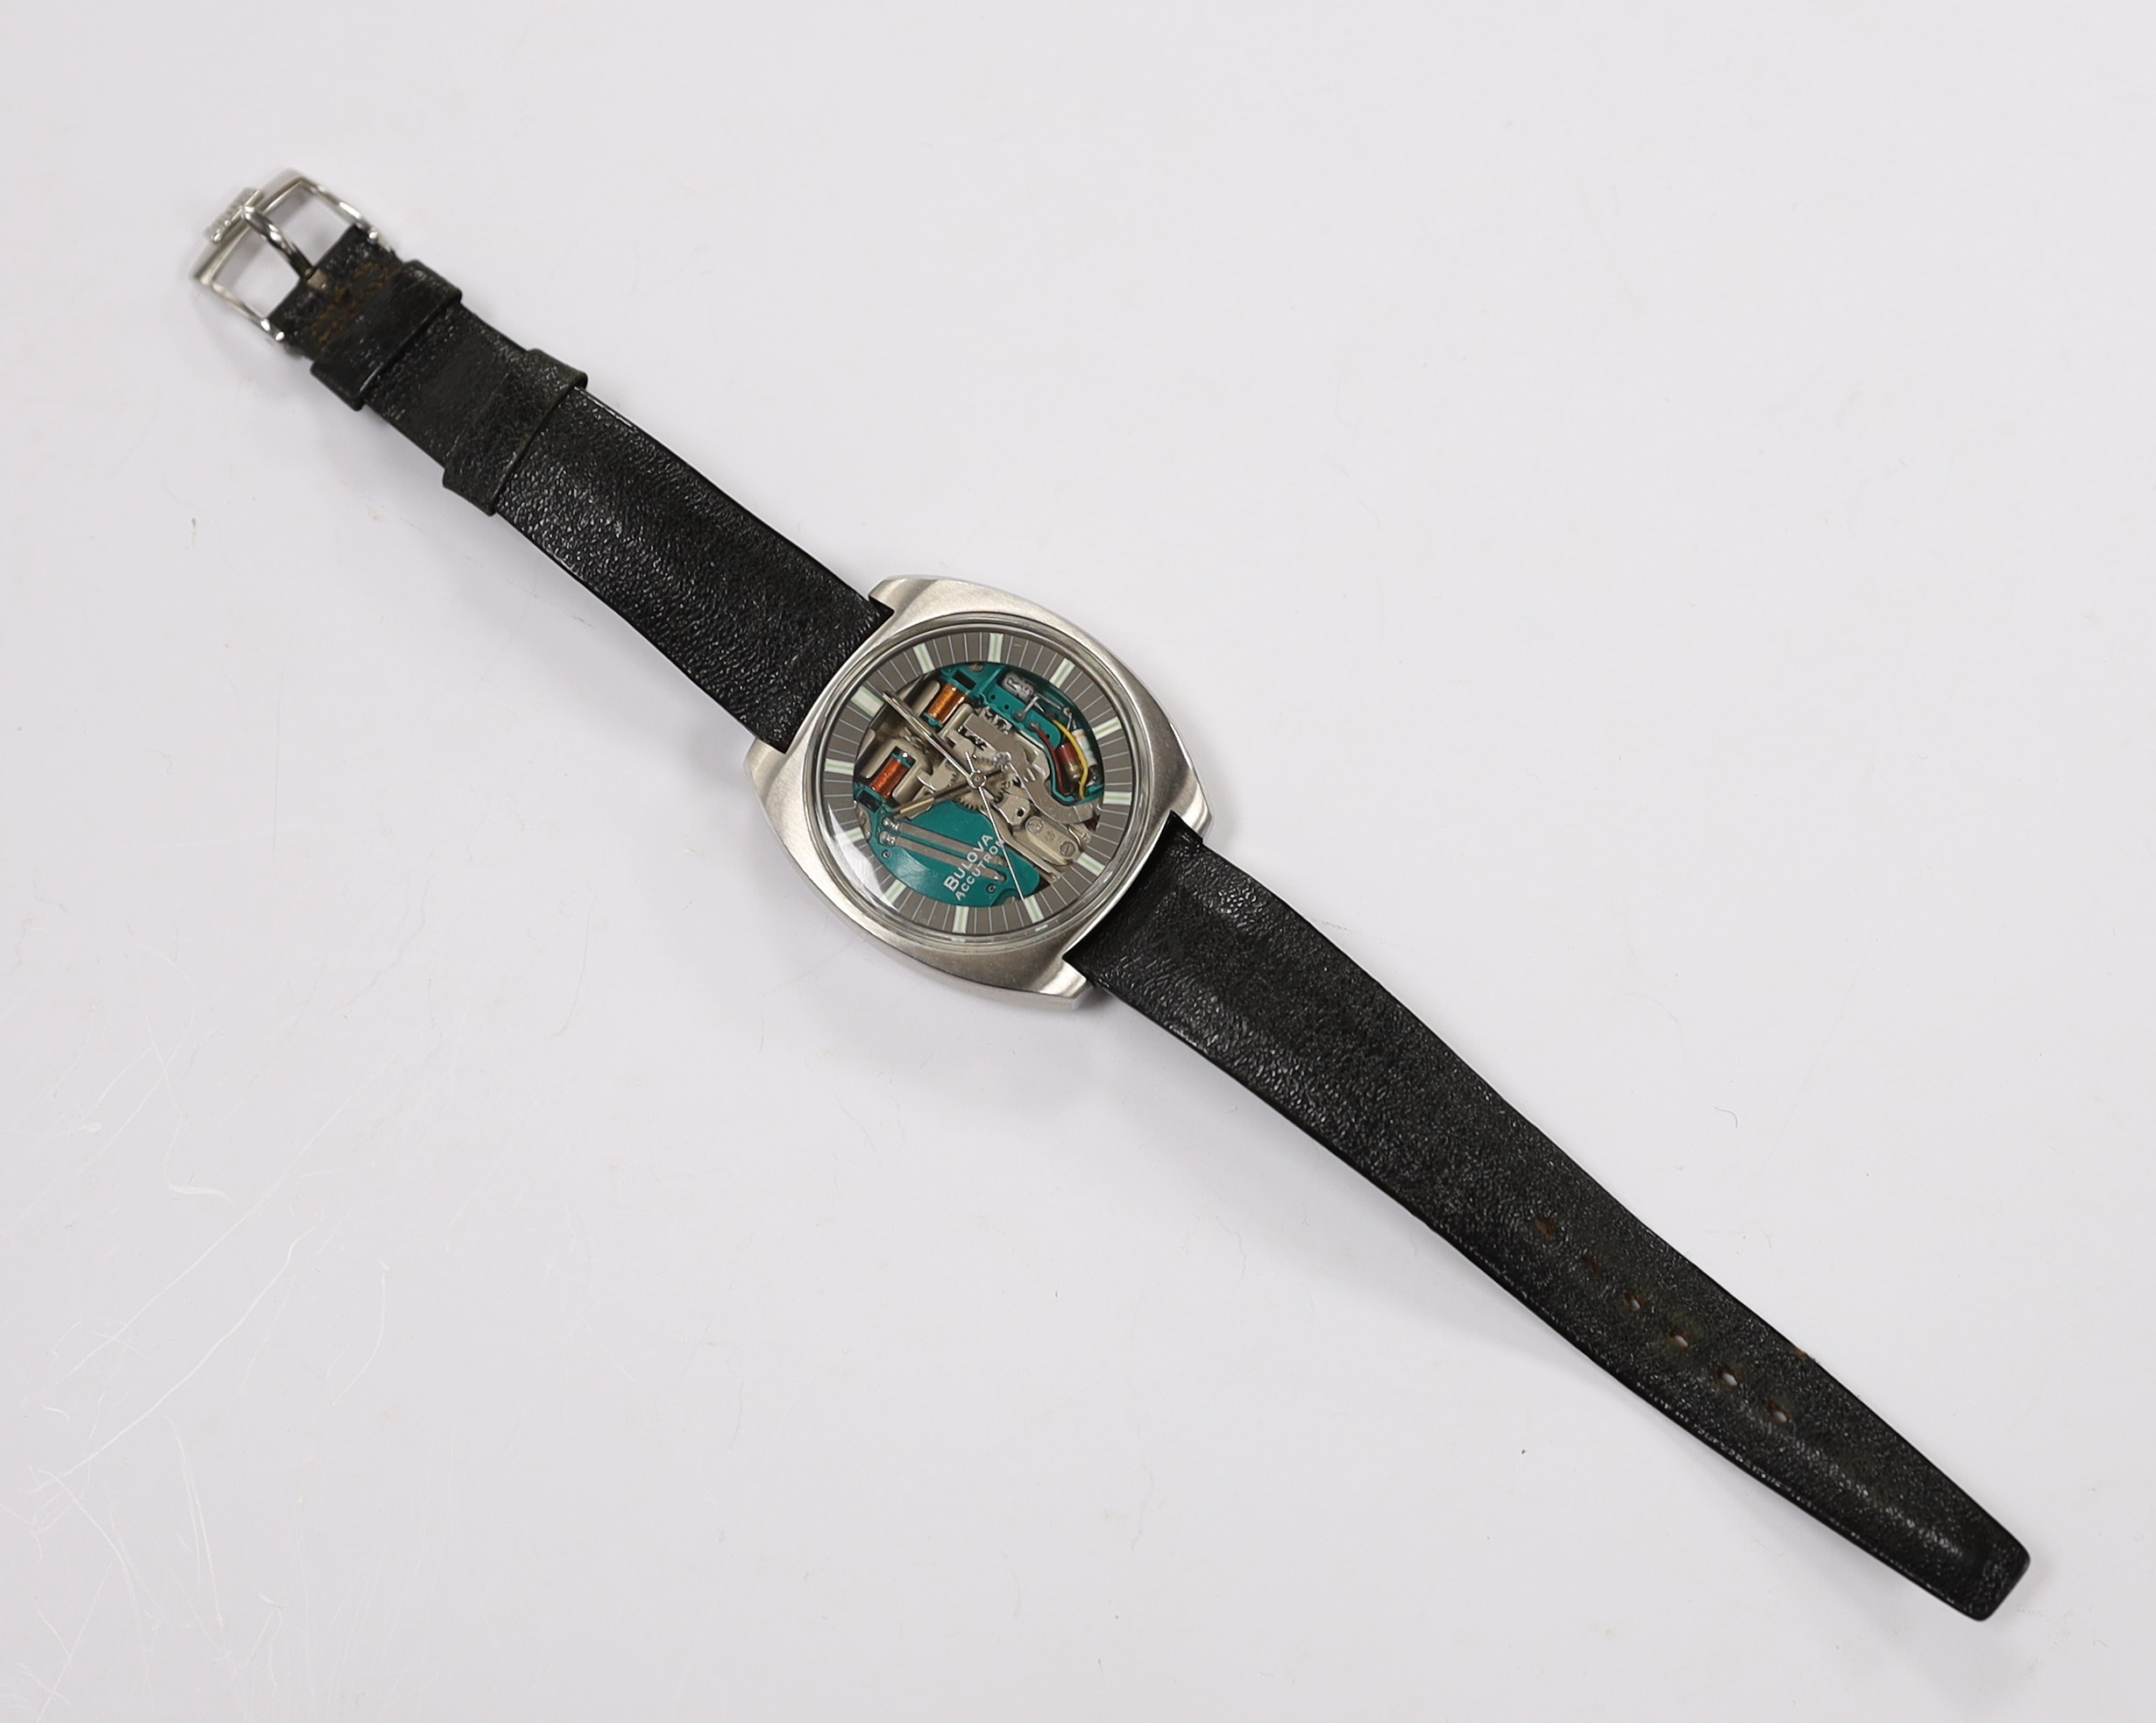 A gentleman's stainless steel Bulova Accutron M7 wrist watch, on a Bulova leather strap, case diameter 38mm.